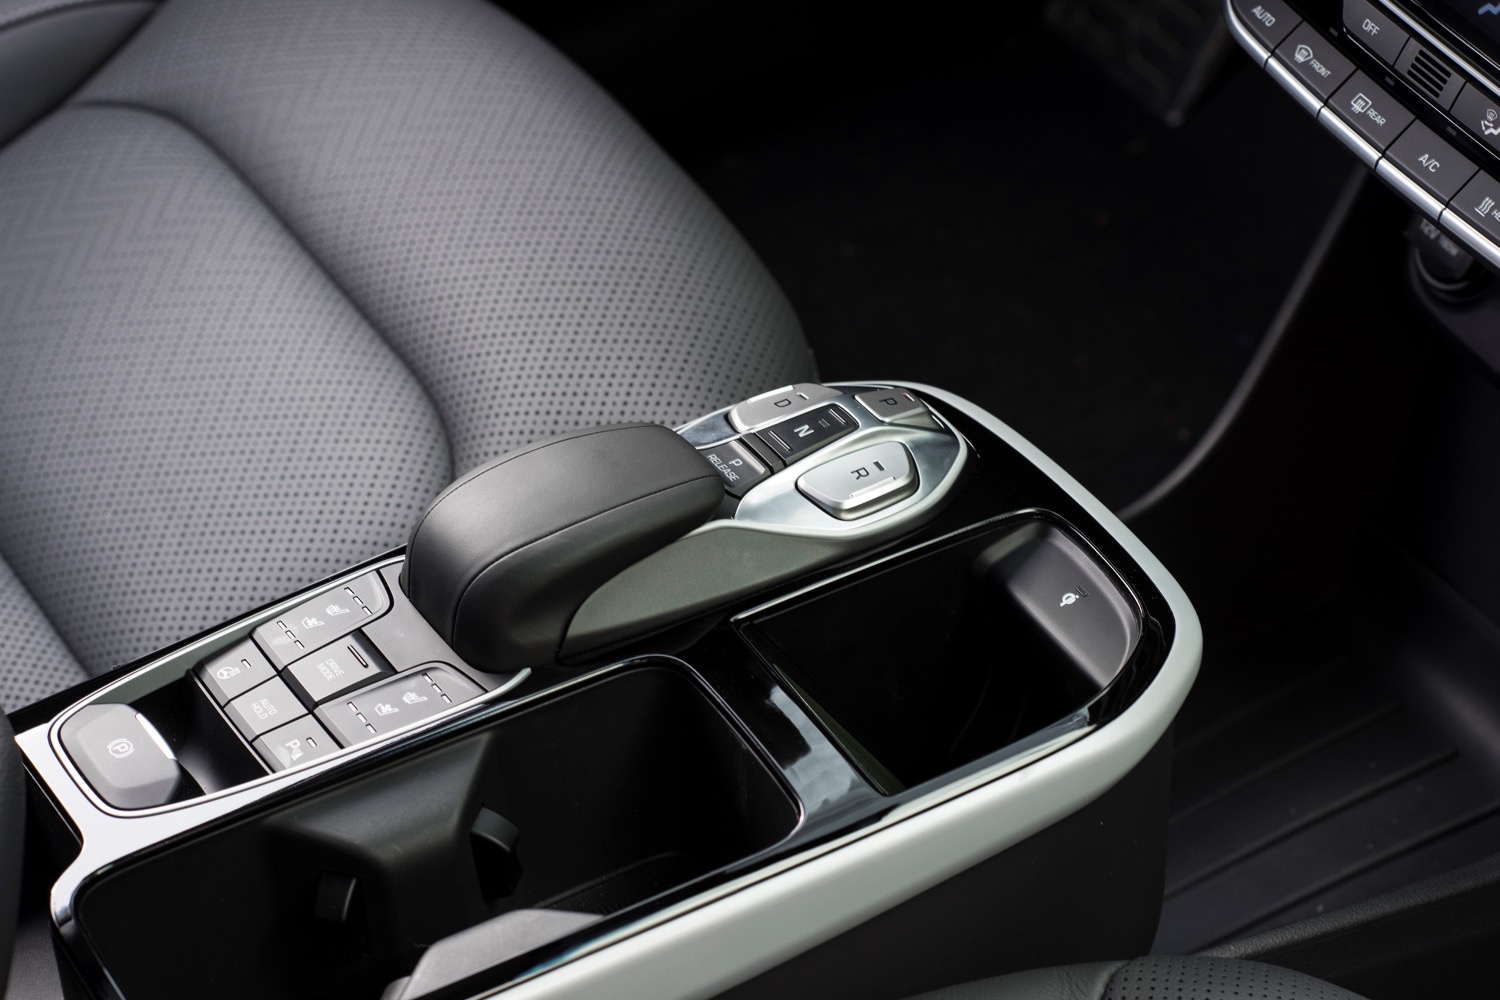 Hyundai Ioniq autonomous concept